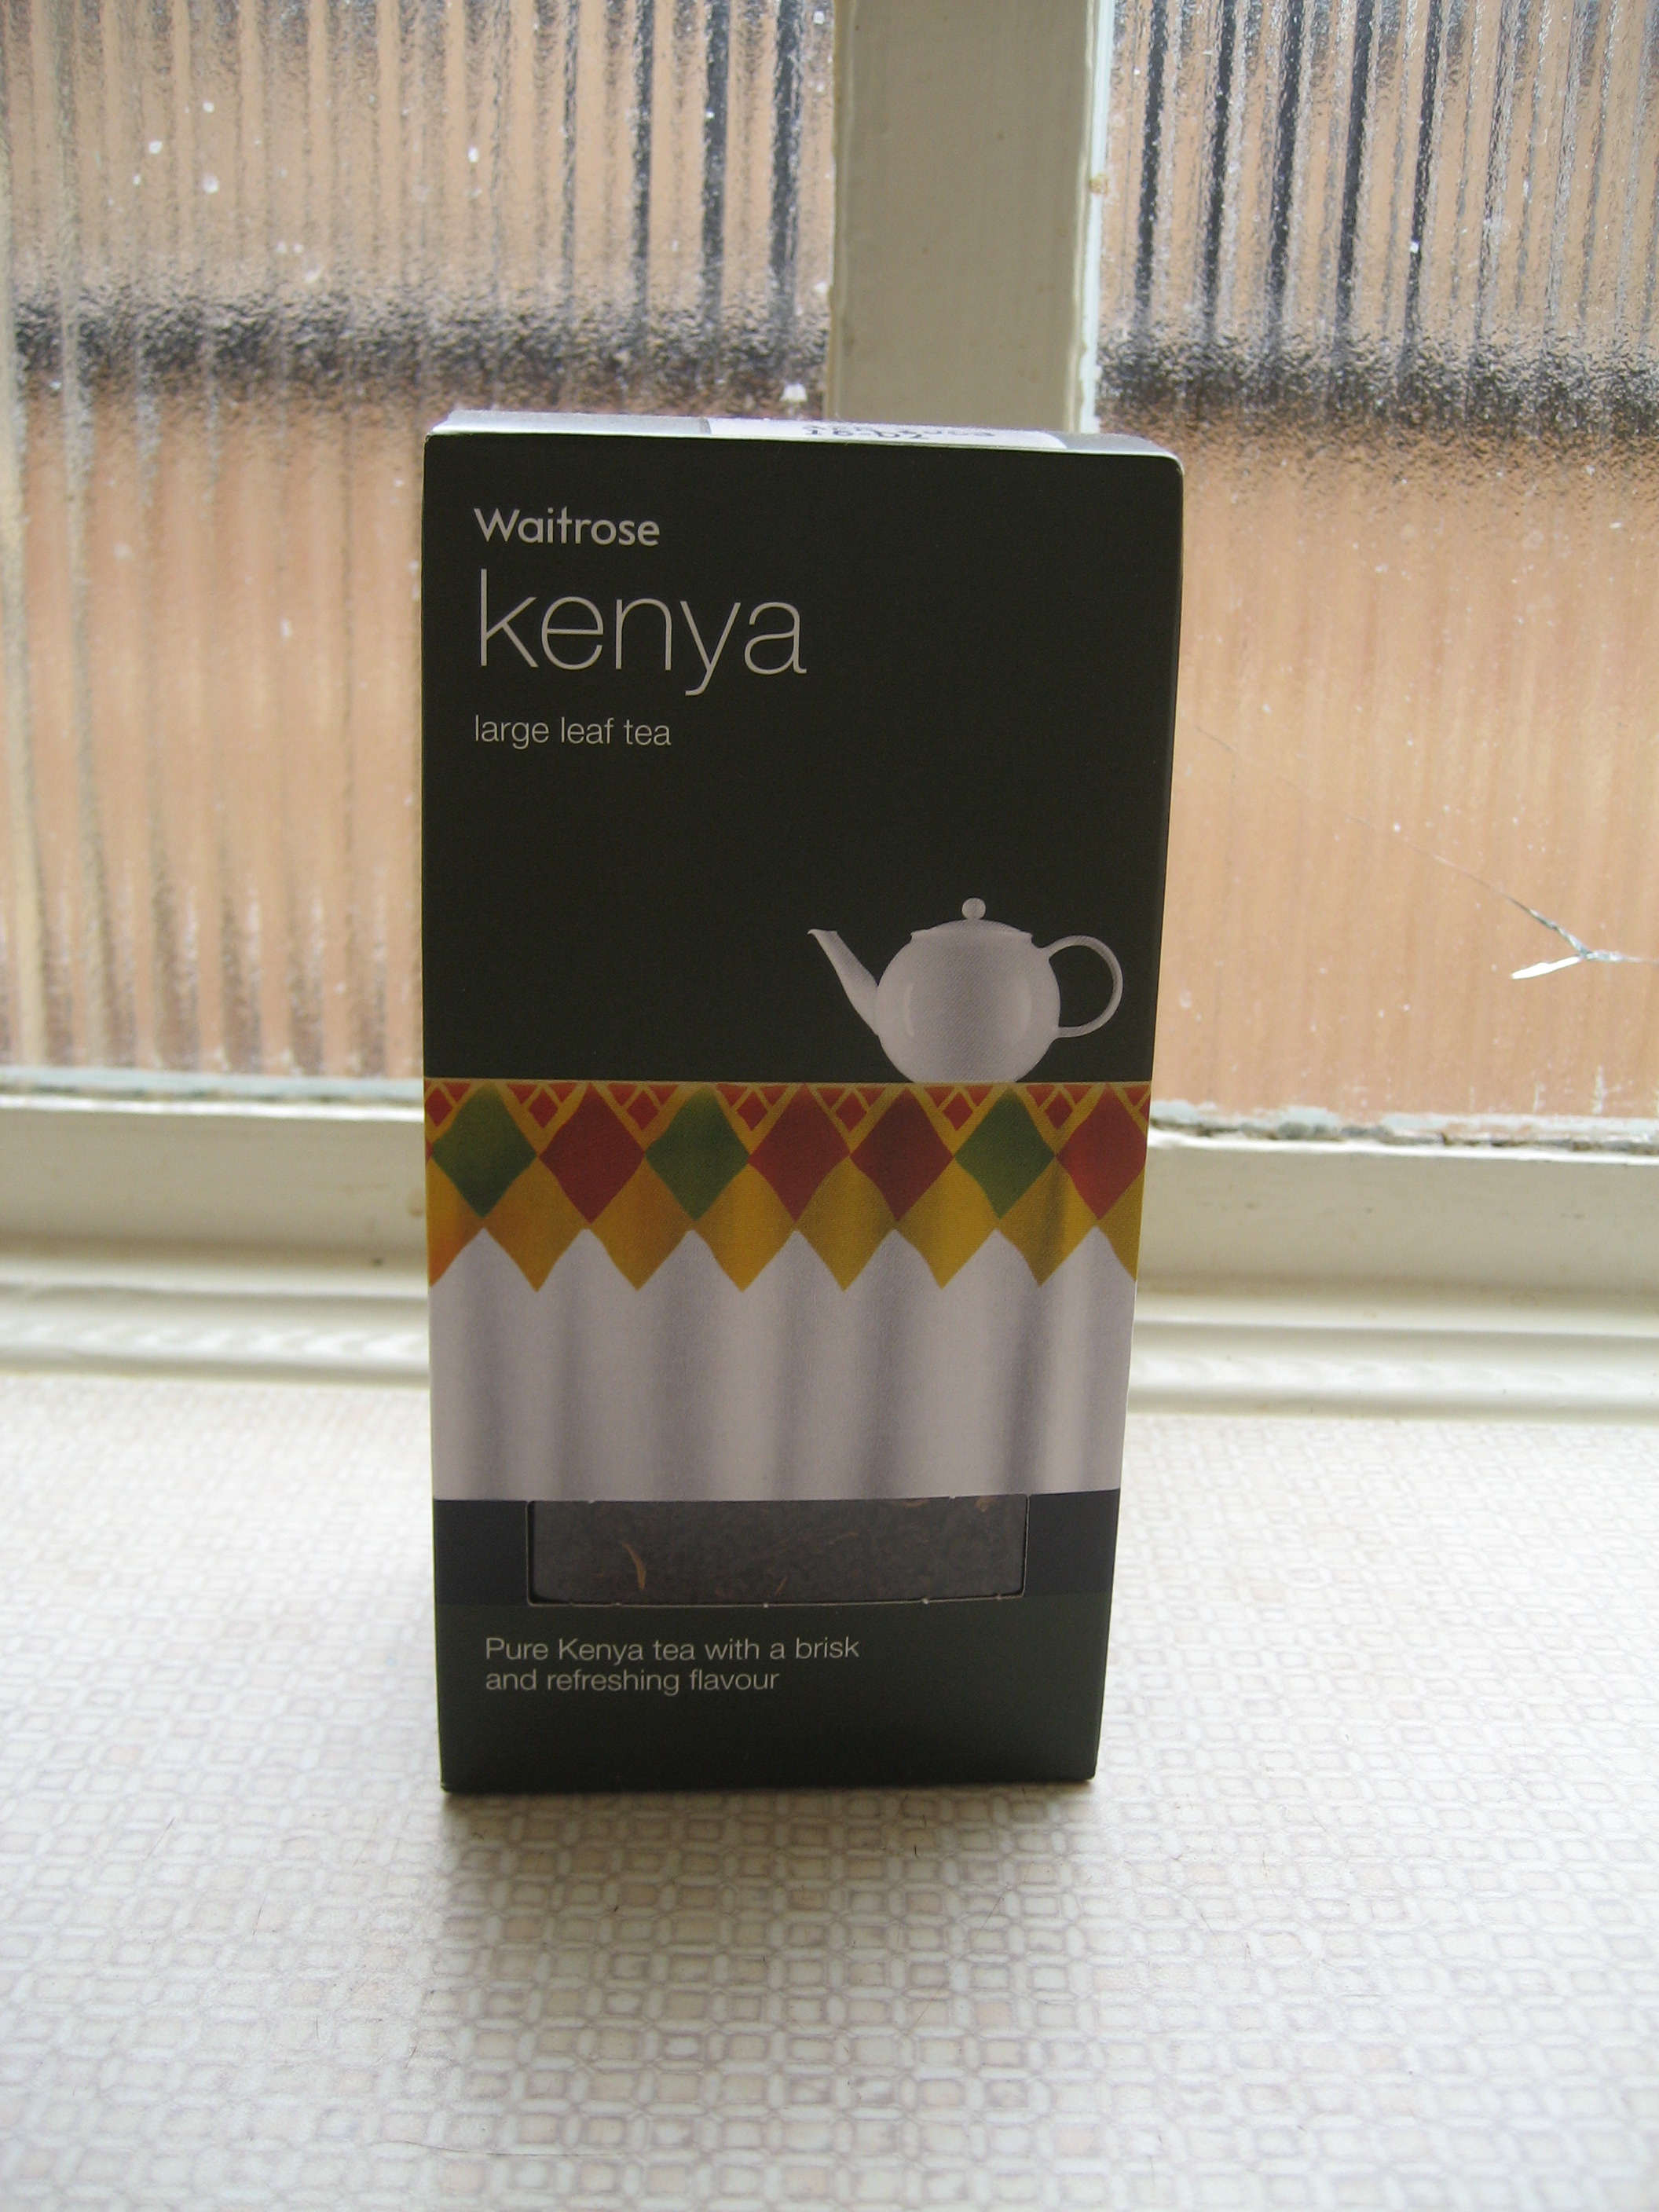 Waitrose Kenya large leaf tea